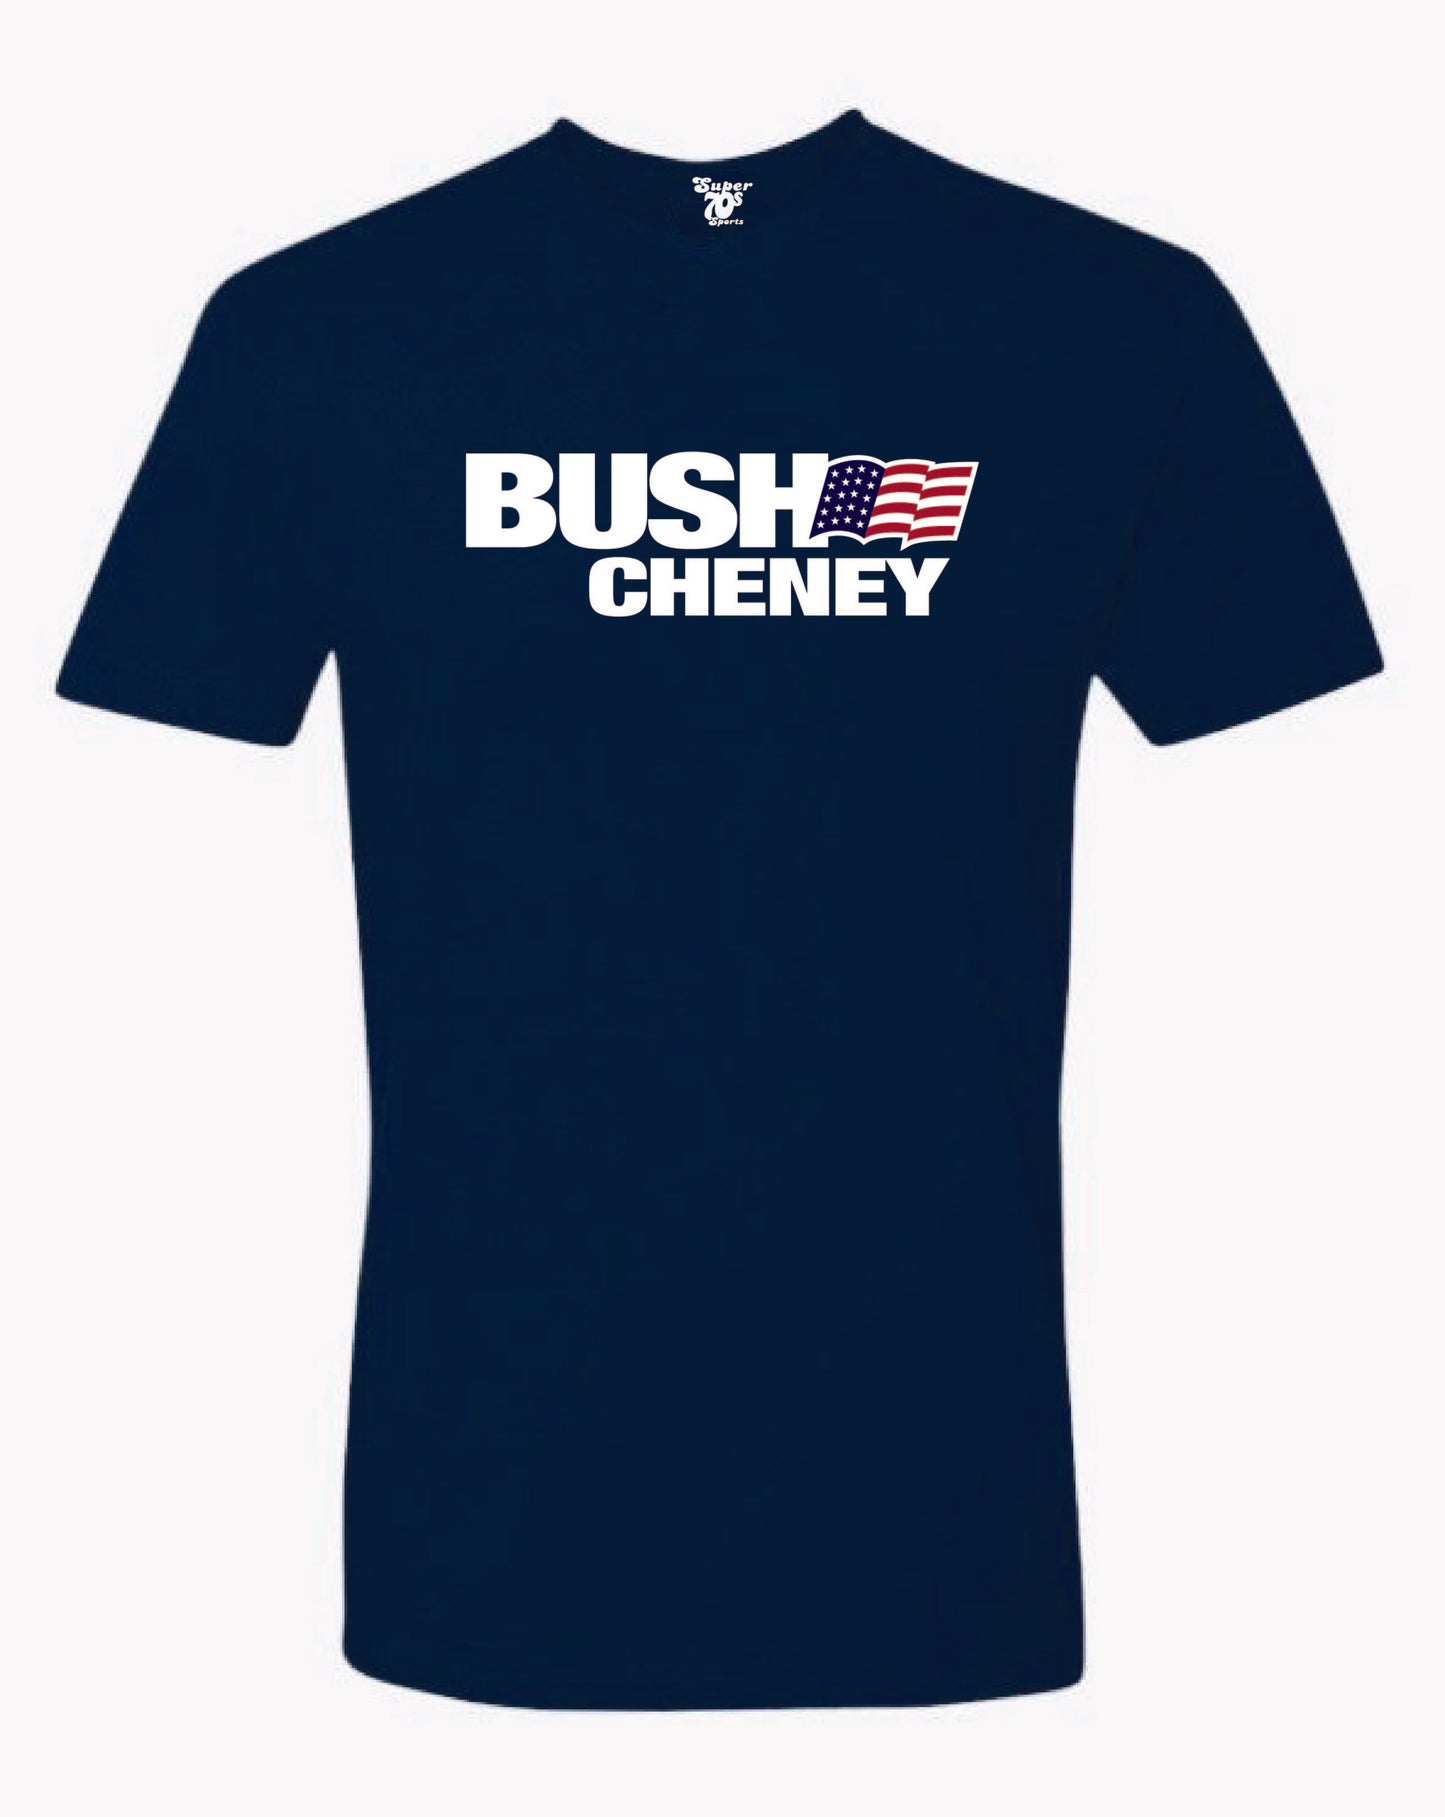 Bush / Cheney Tee